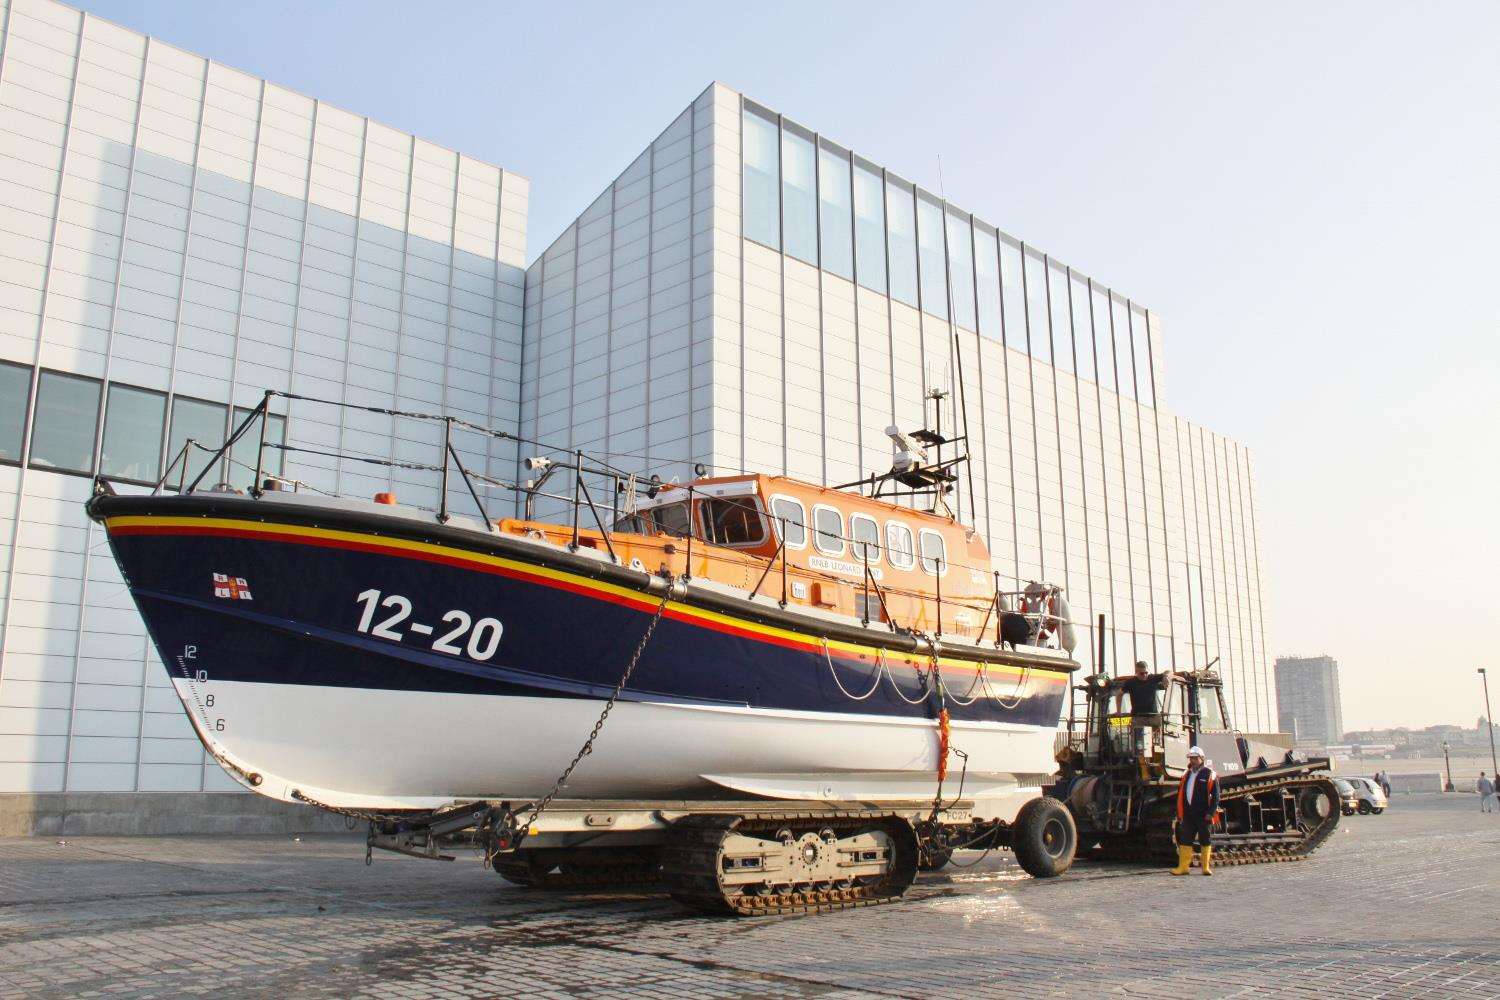 Margate RNLI lifeboat. Stock image